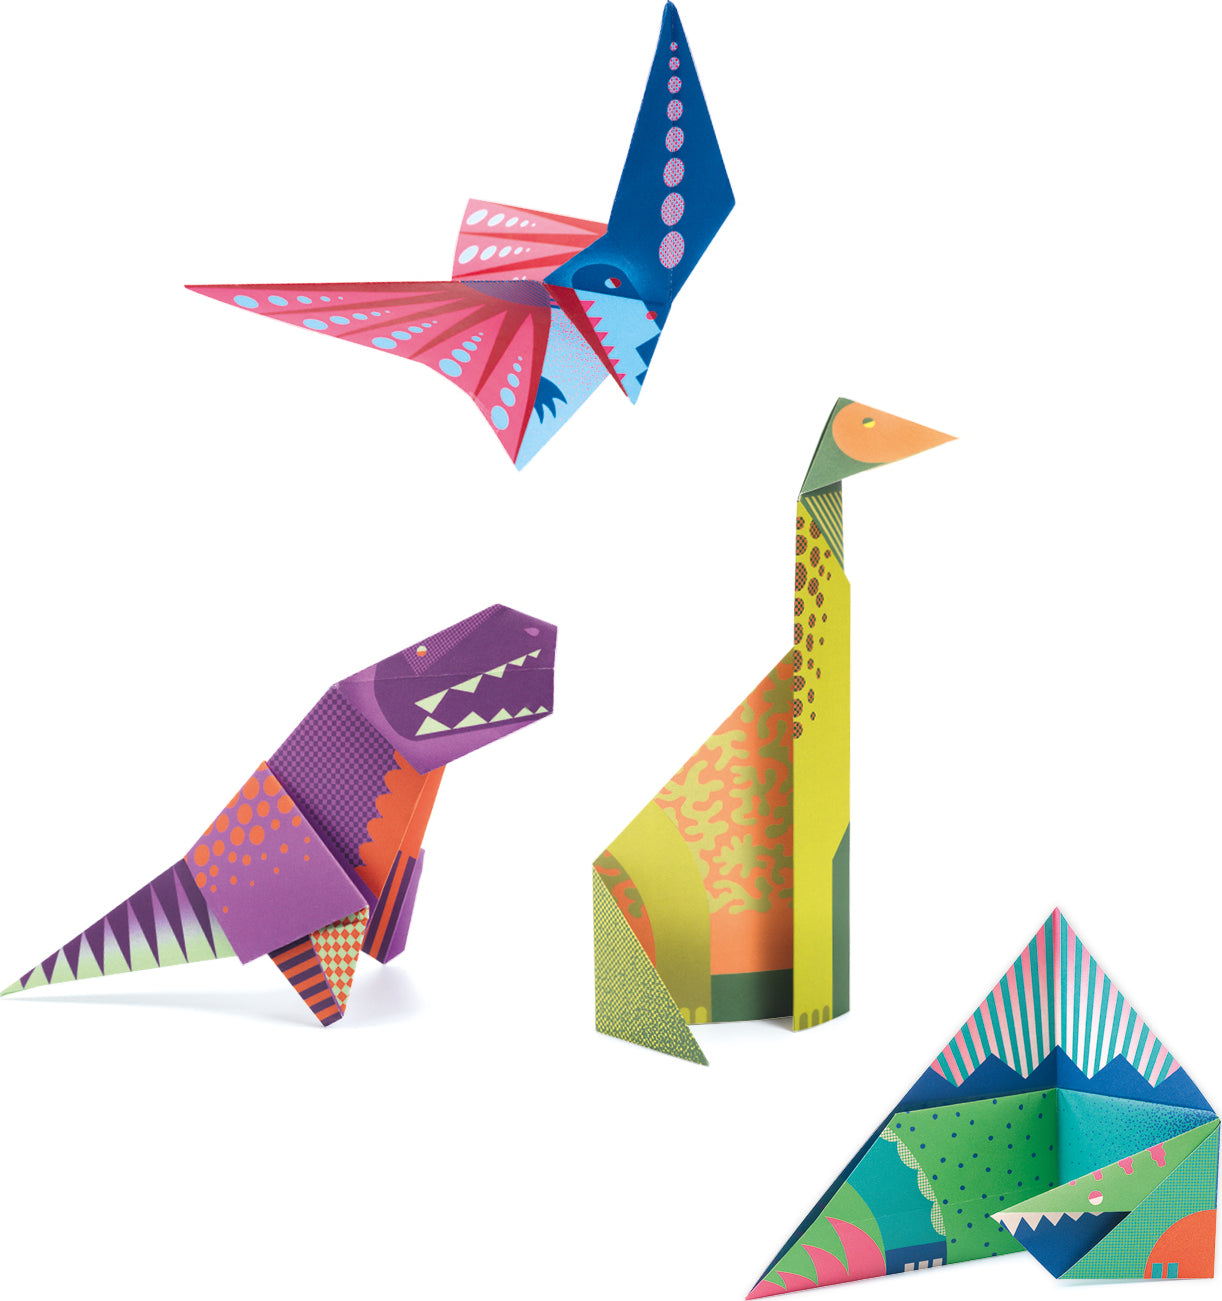 Dinosaur Origami